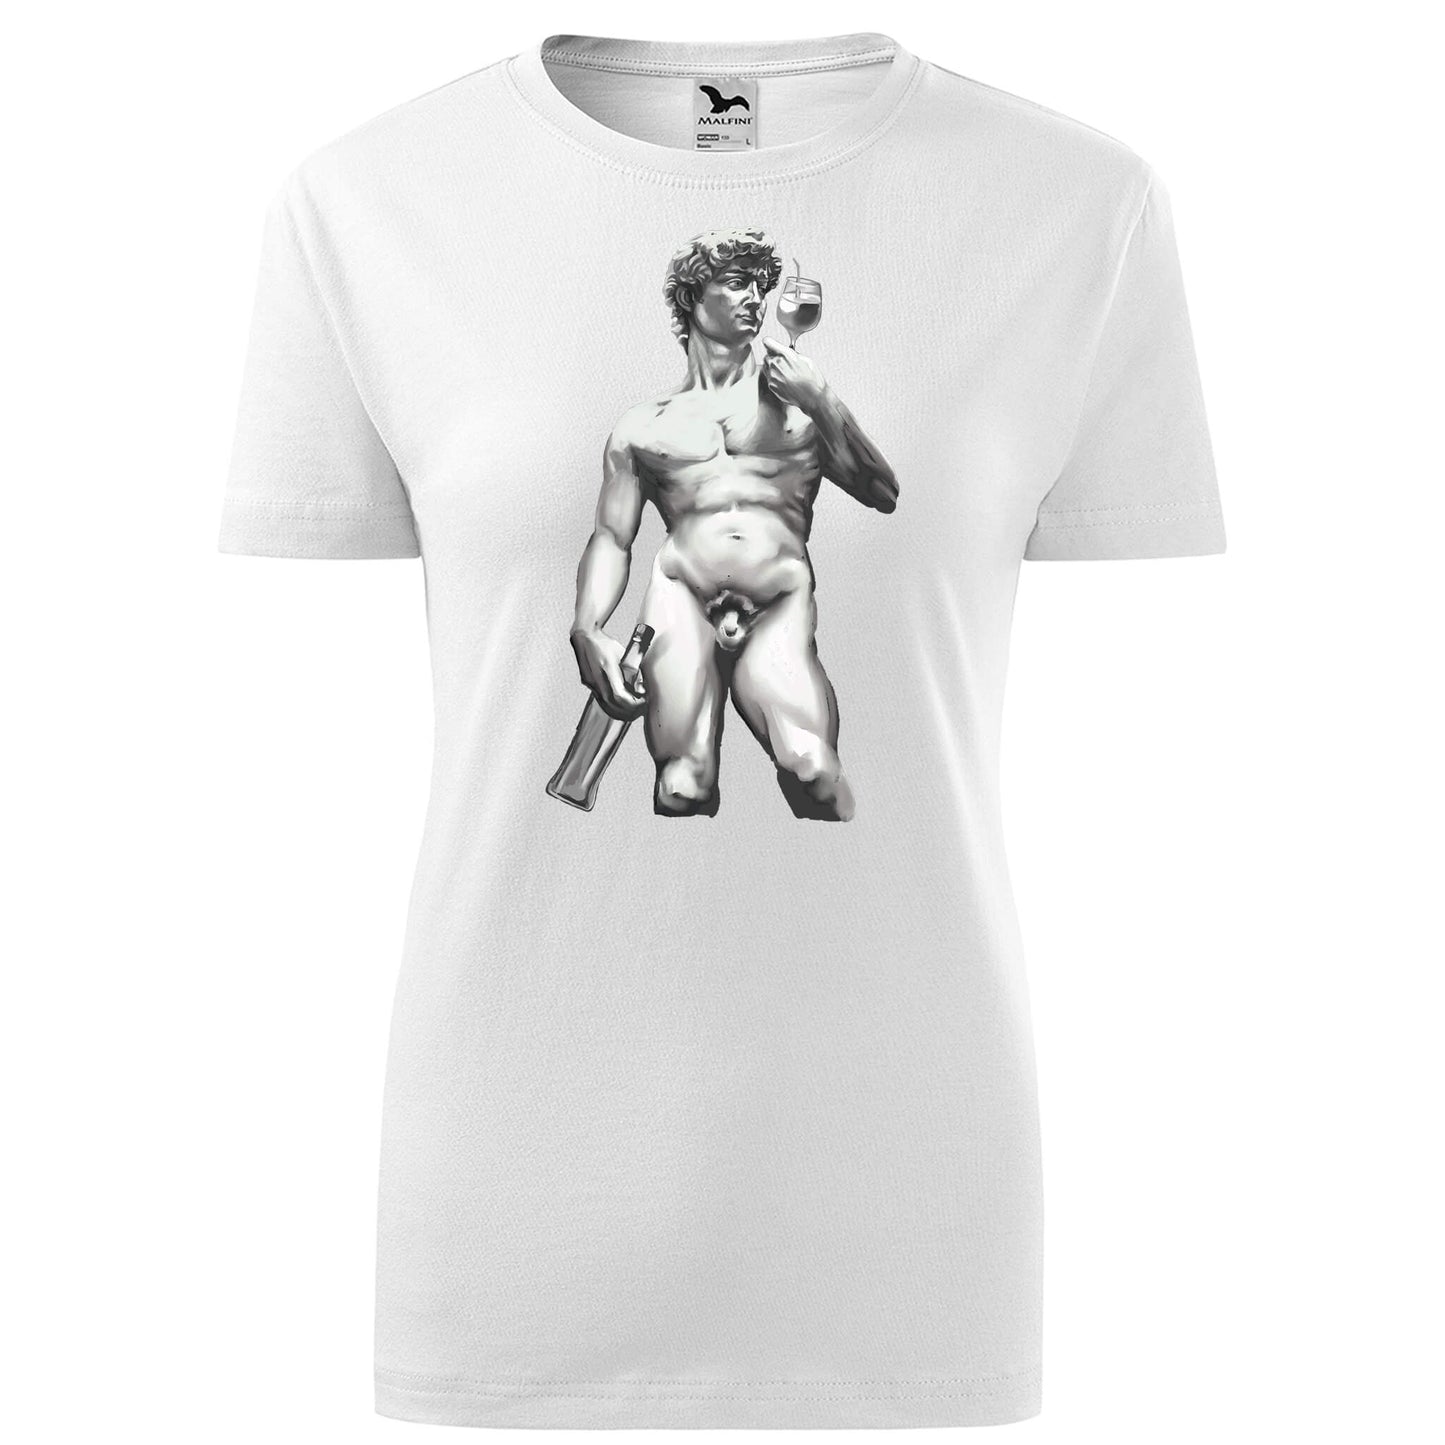 David statue wine t-shirt - rvdesignprint